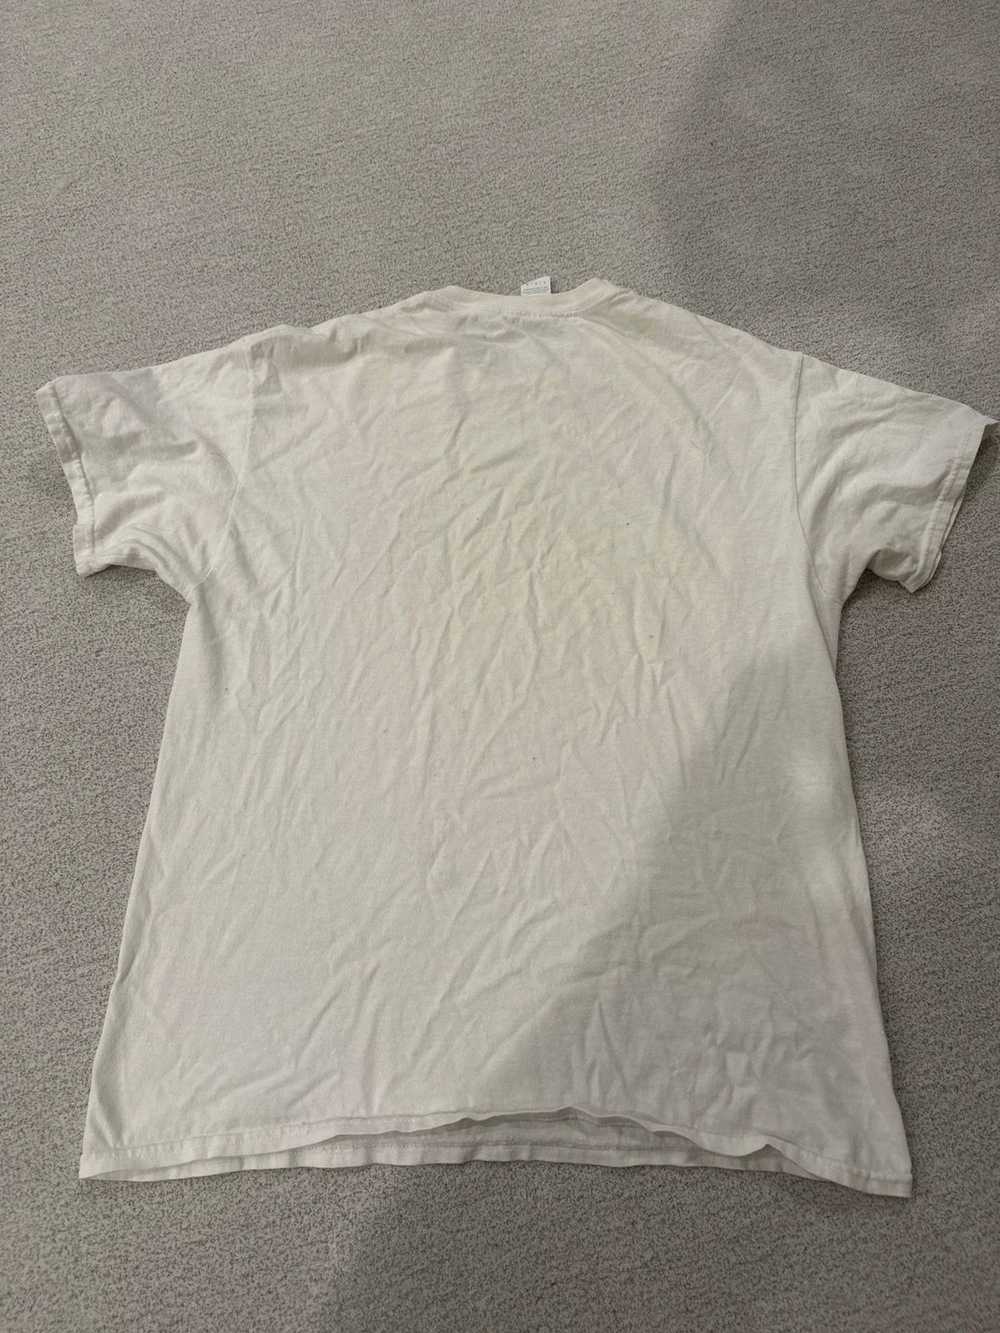 Gildan × LIL PEEP Faded Crybaby T-Shirt - image 4